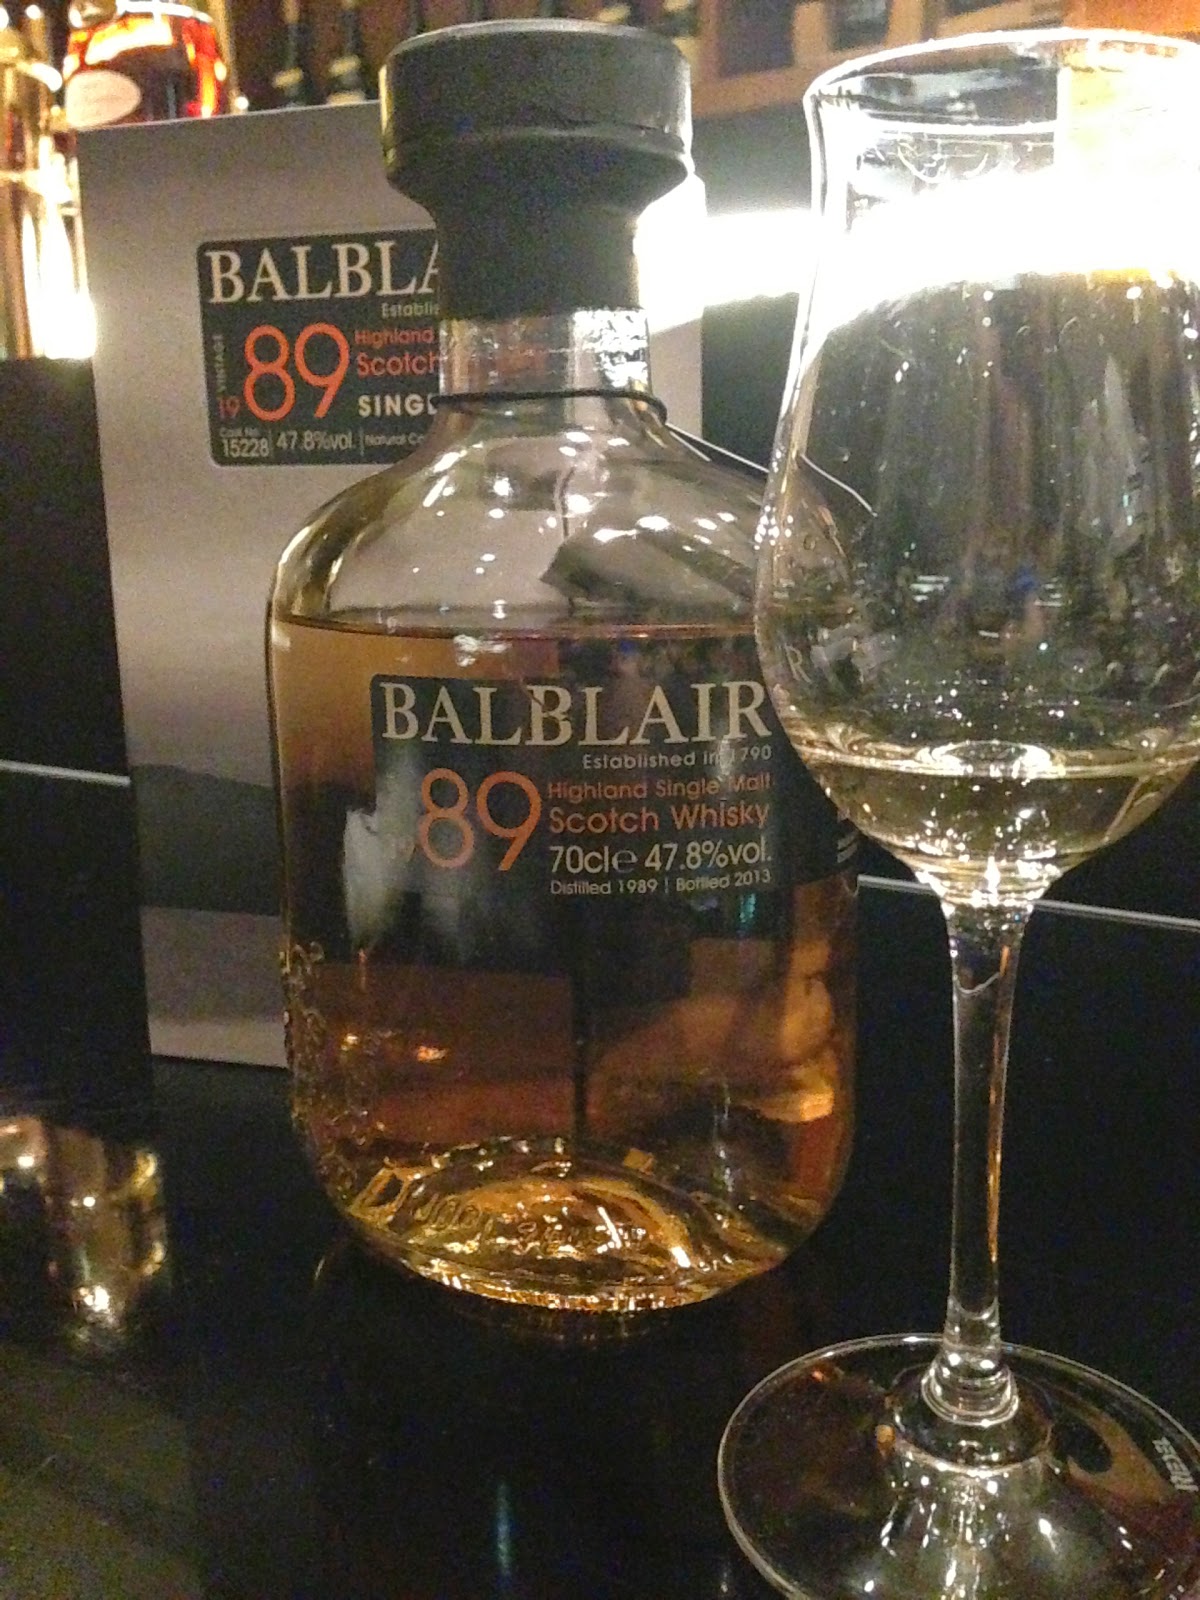 BALBLAIR89 ウイスキー